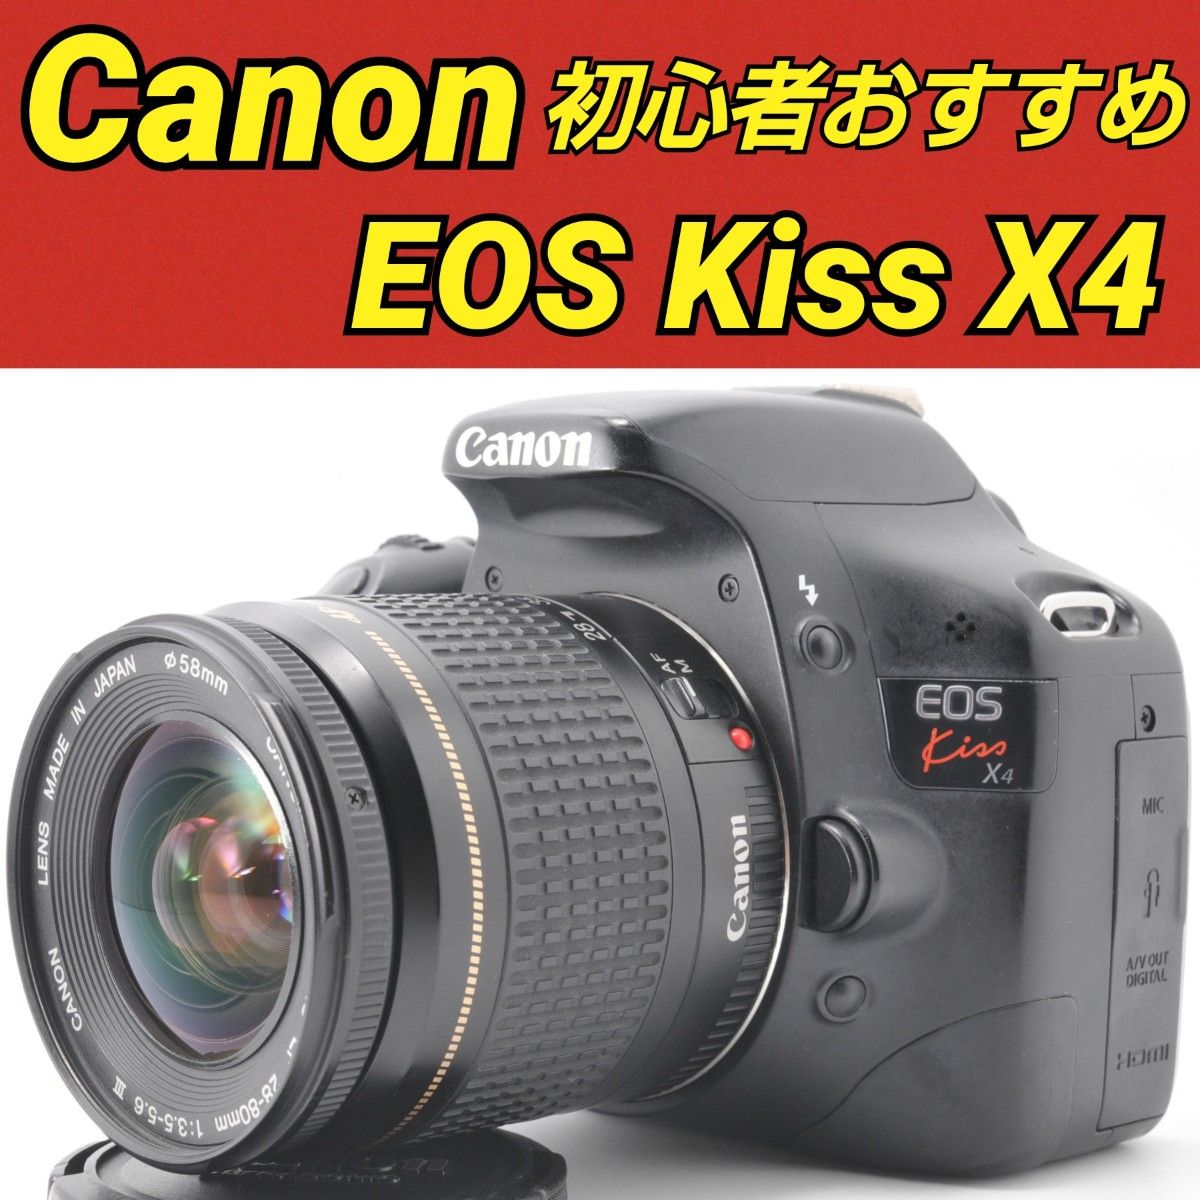 Canon EOS Kiss X4 キヤノン 初心者おすすめ 一眼レフデビュー レンズ